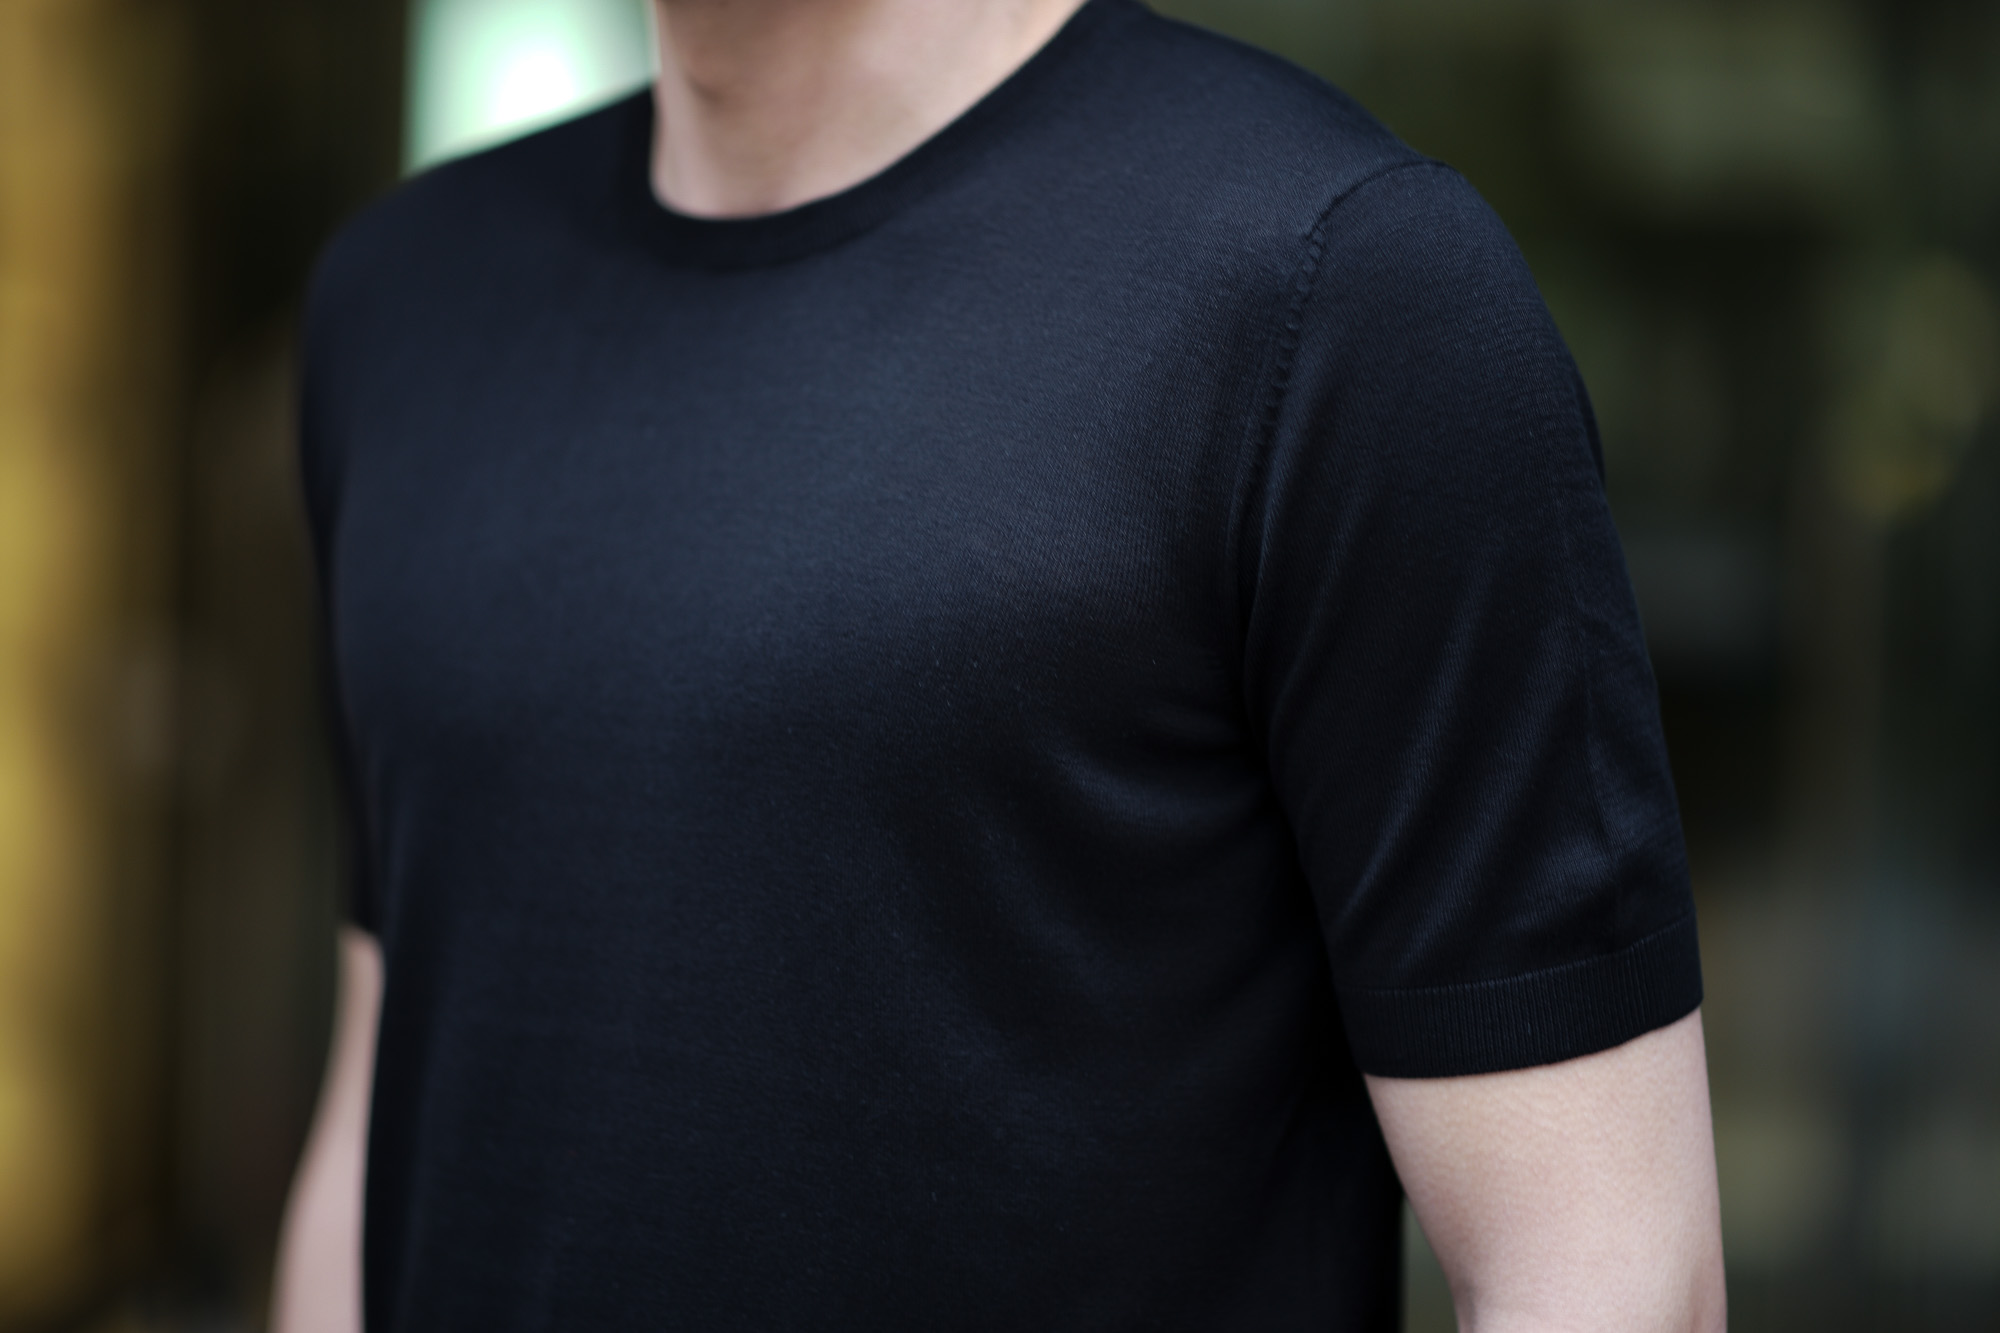 Gran Sasso (グランサッソ) Silk Knit T-shirt (シルクニット Tシャツ) SETA (シルク 100%) ショートスリーブ シルク ニット Tシャツ BLACK (ブラック・099)　made in italy (イタリア製) 2020 春夏新作  gransasso 愛知 名古屋 altoediritto アルトエデリット